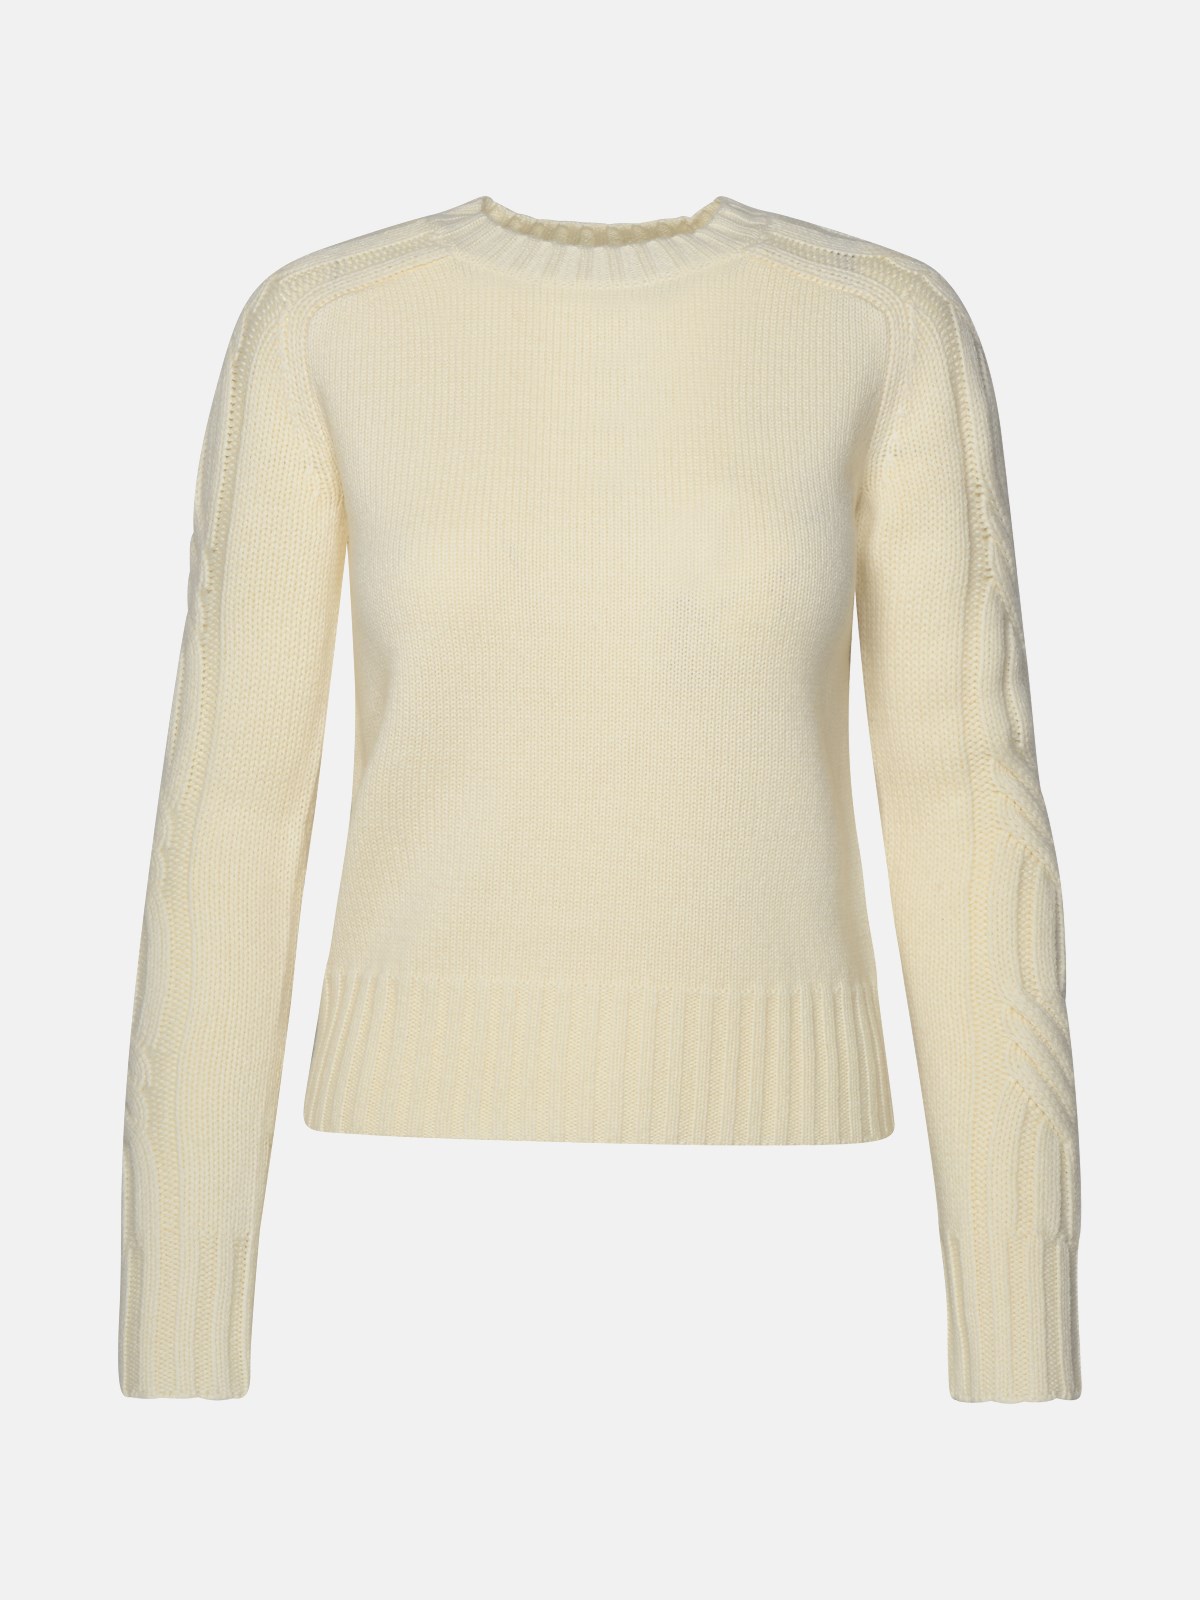 Max Mara Ivory Cashmere Sweater In White